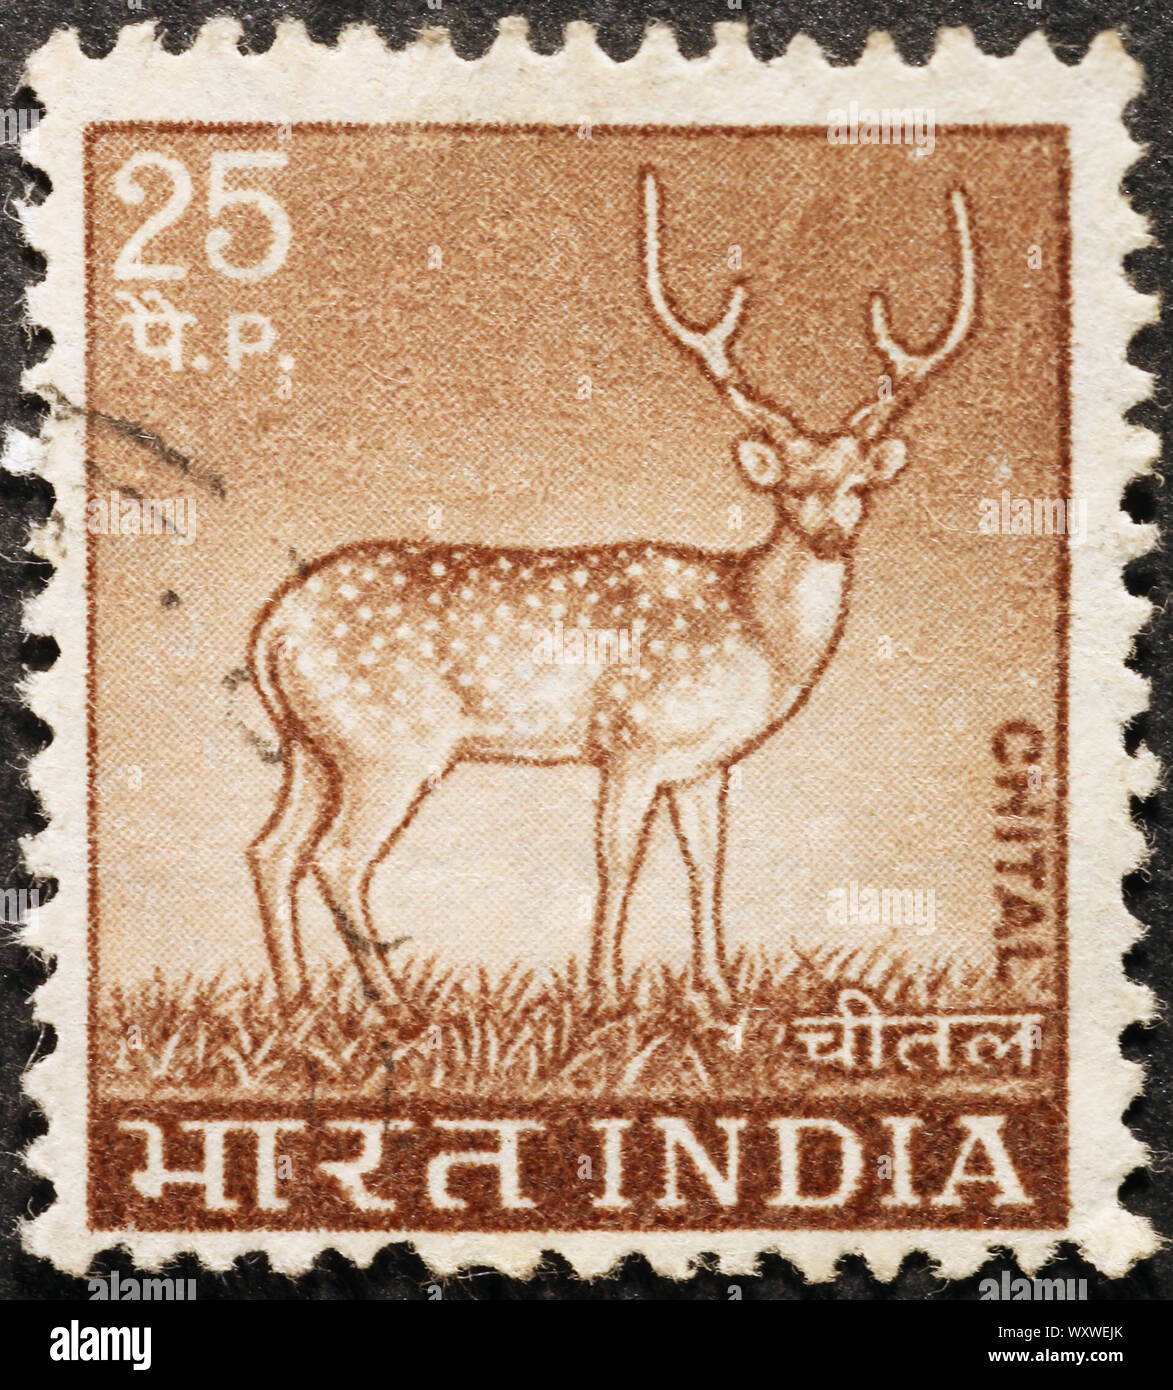 Spotted deer sur timbre indien vintage Banque D'Images